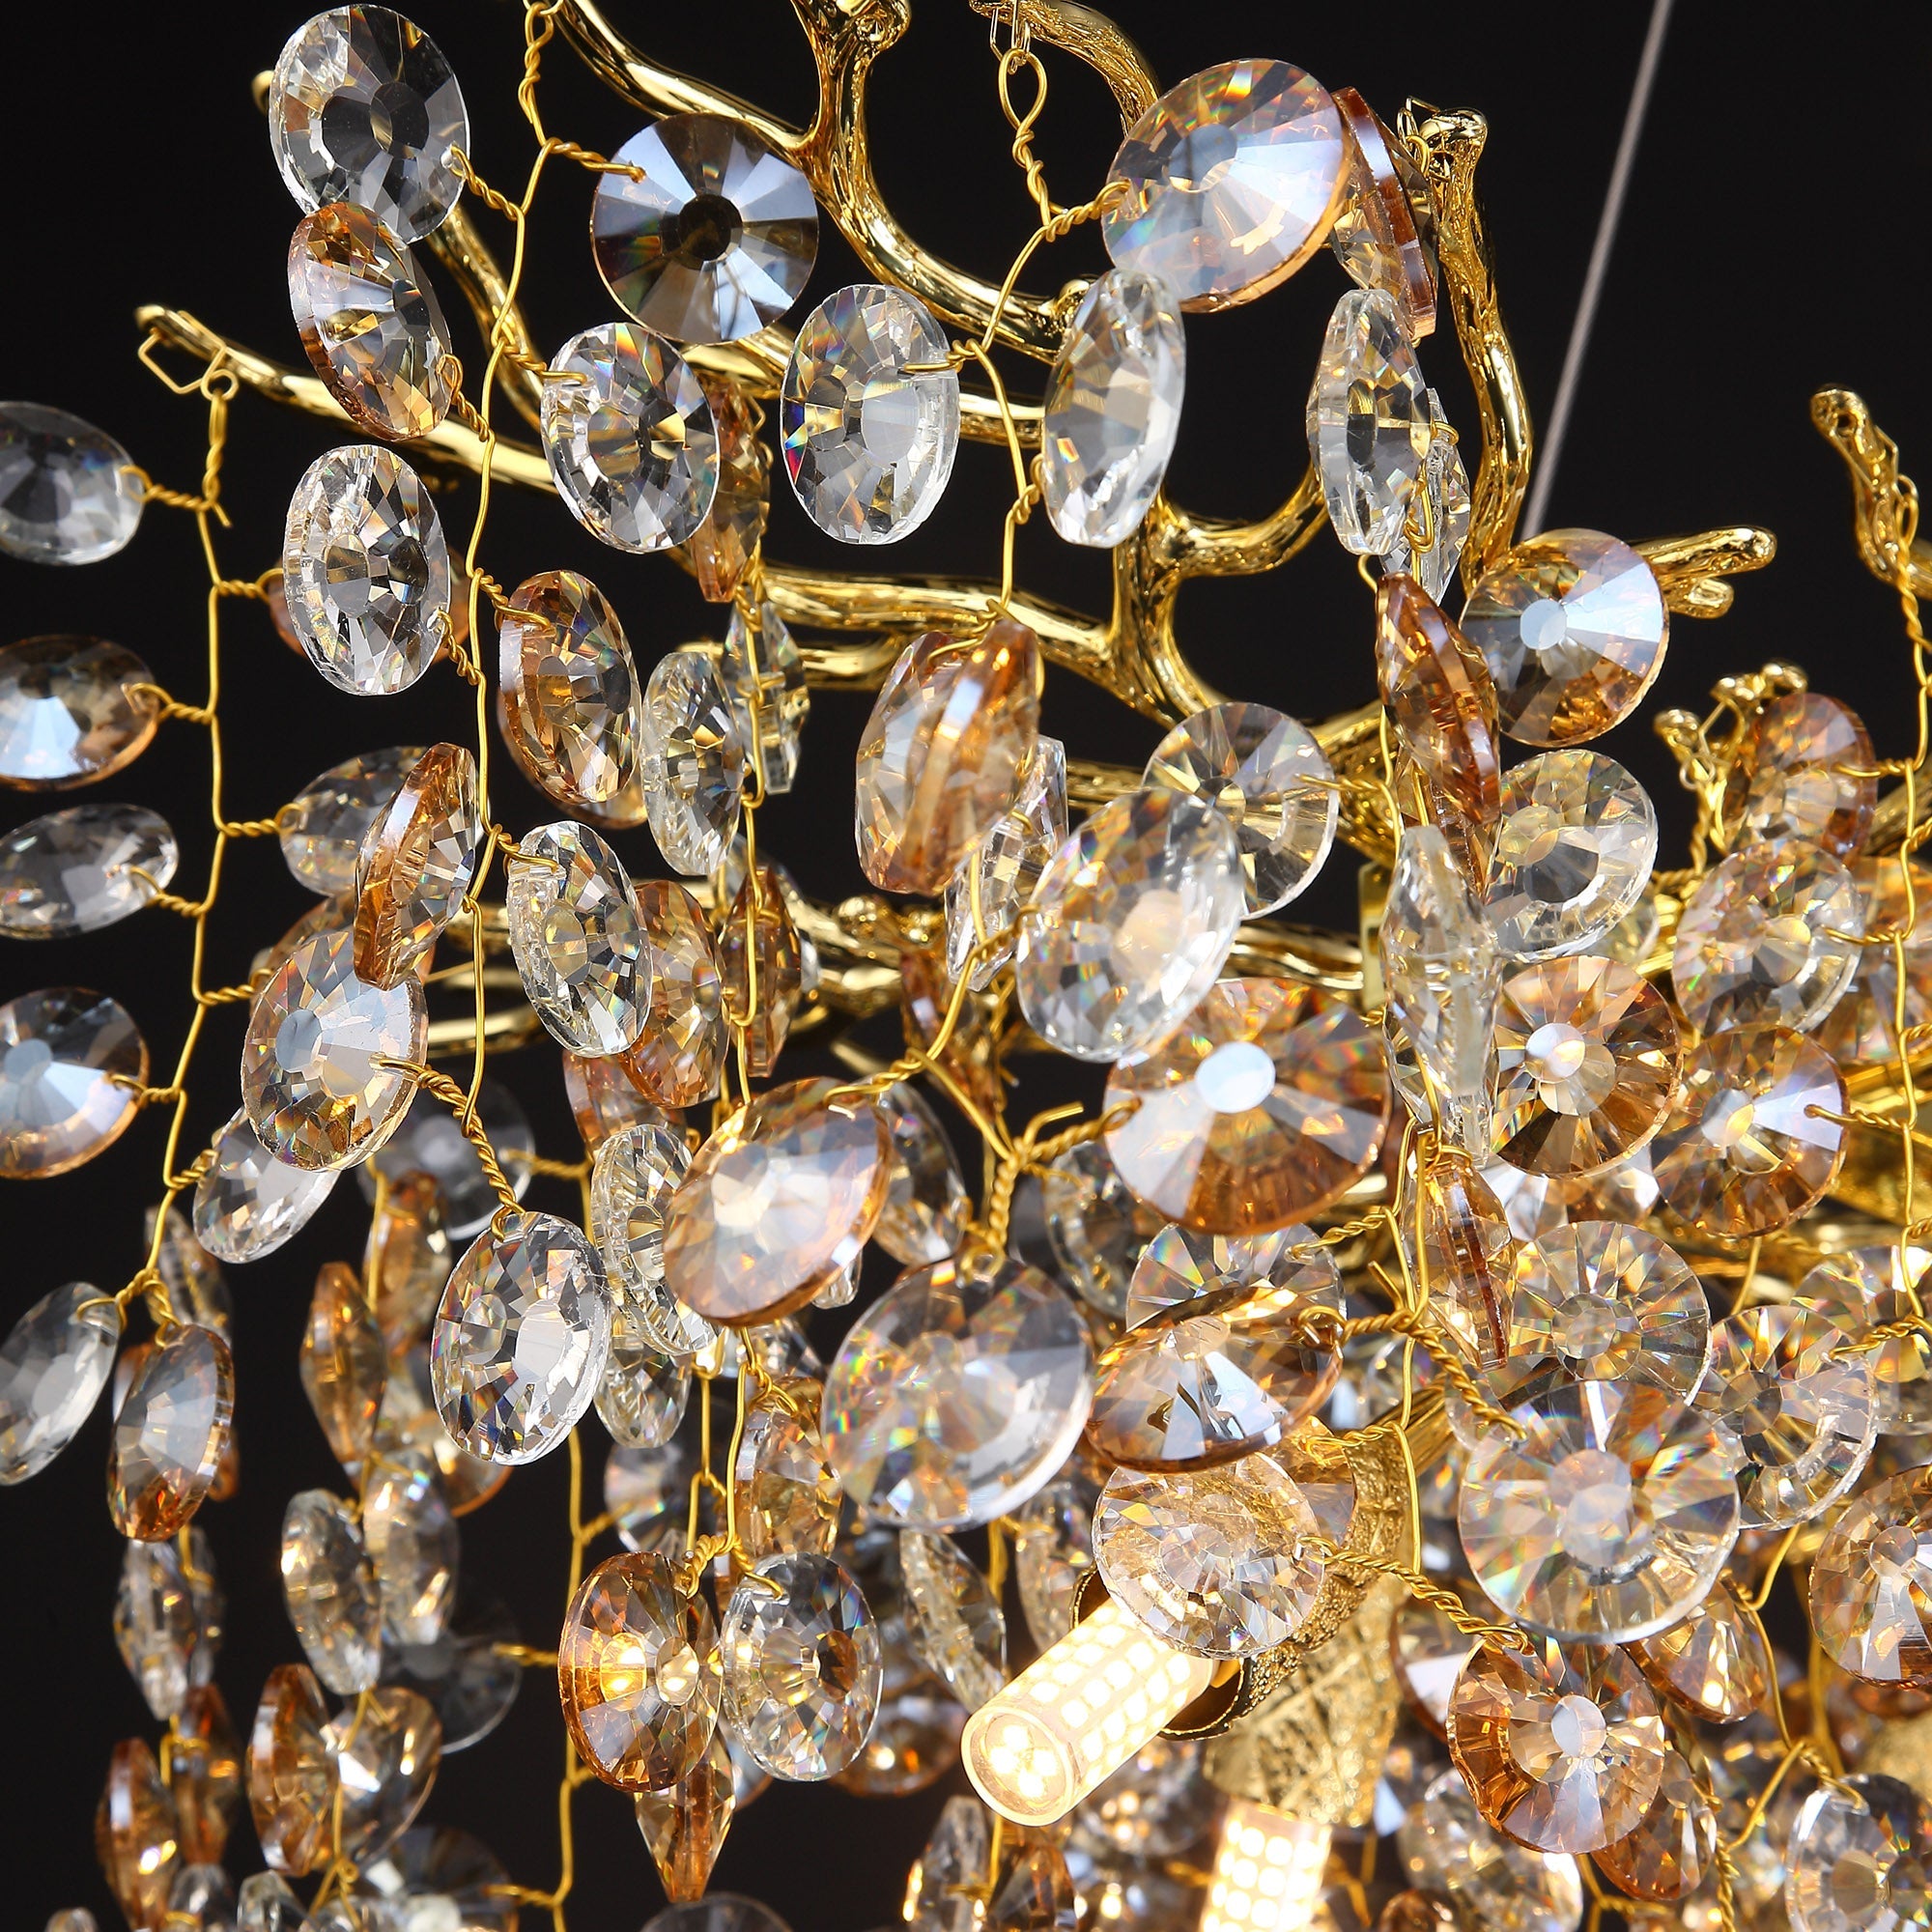 Thisbe Modern Crystal Linear Gold Branch Chandelier, Luxury Chandelier Living Room chandelier Kevin Studio Inc   